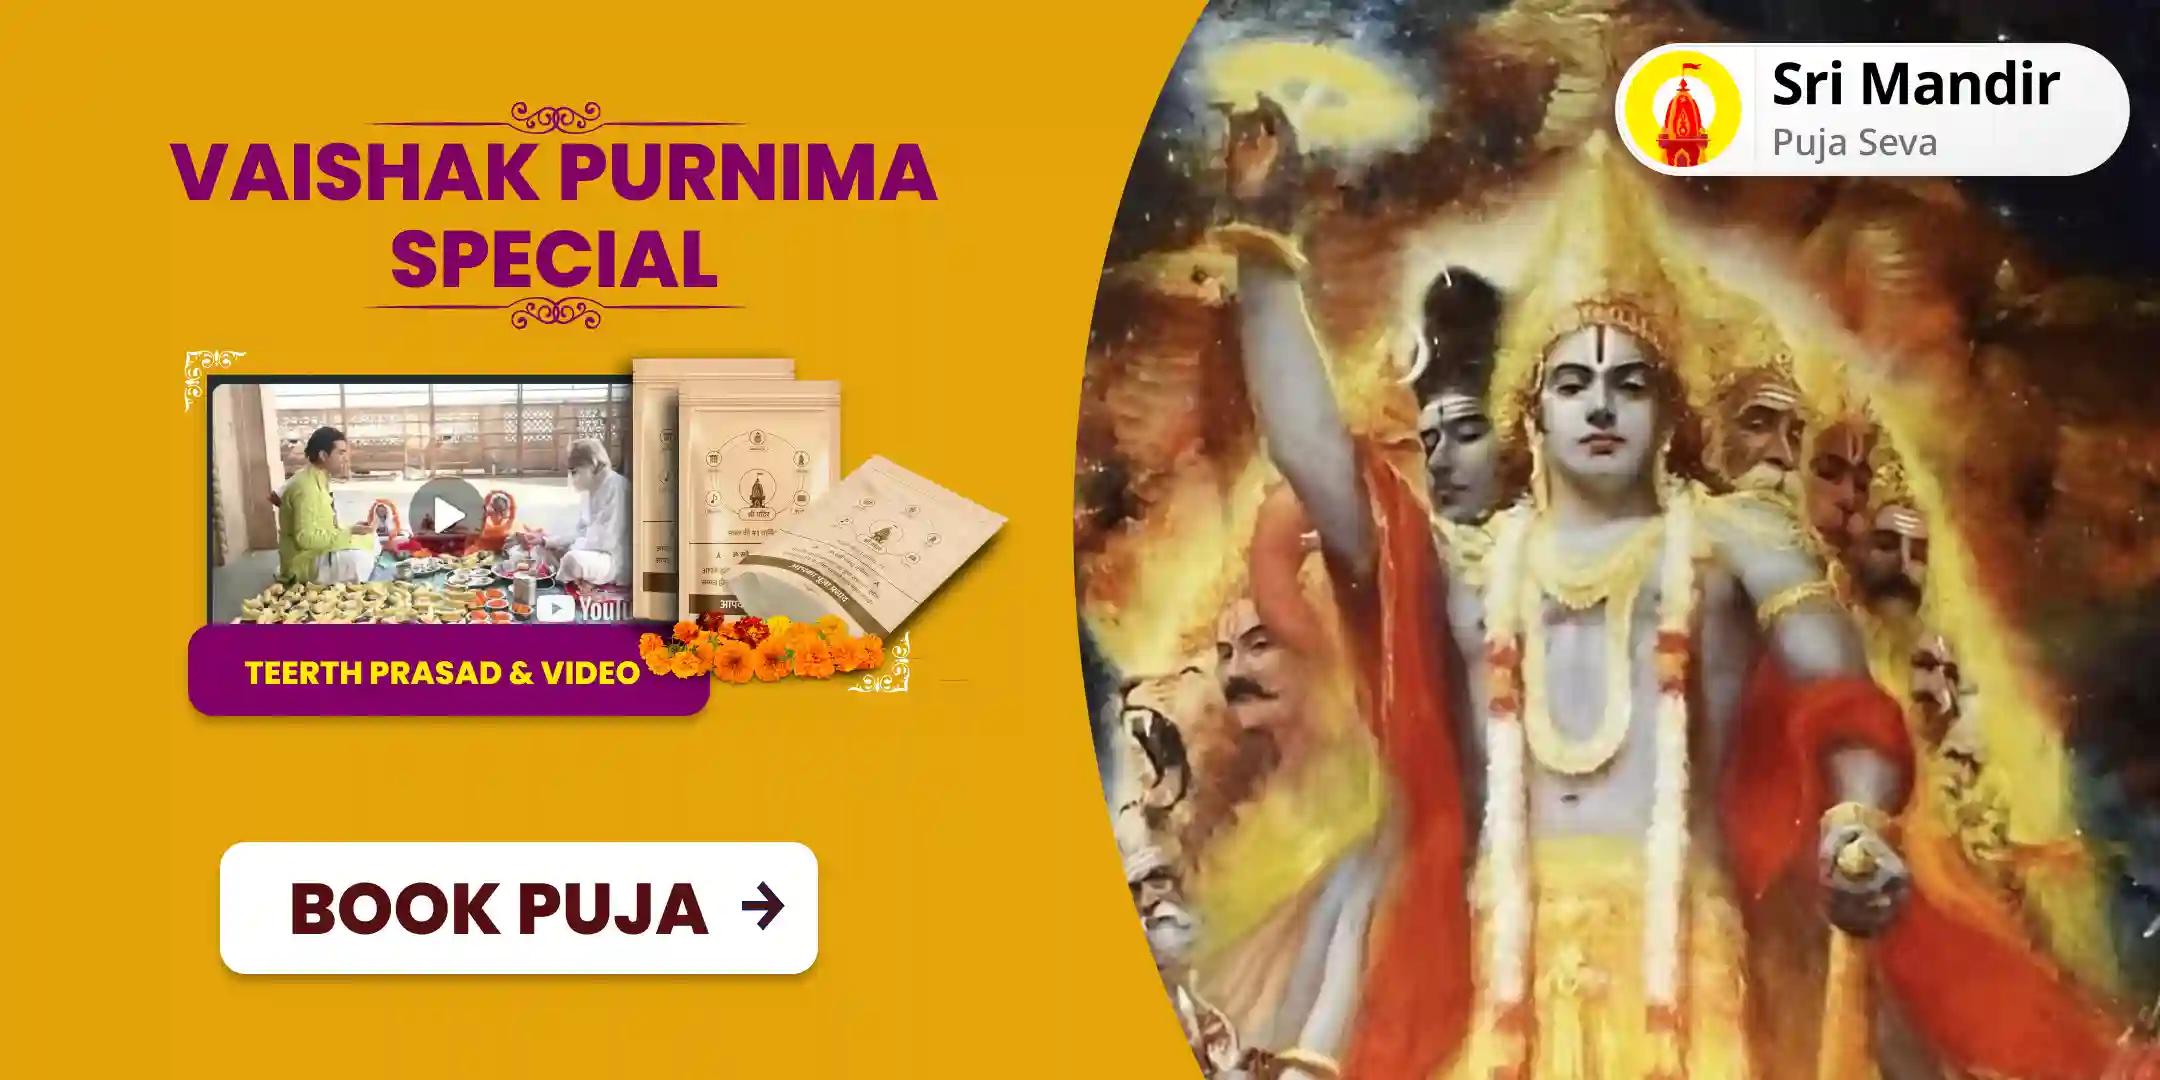 Vaishakh Purnima Thursday Special Vishnu Sudarshan Havan and Sahasranama Path for Promoting Stability and Prosperity in Life